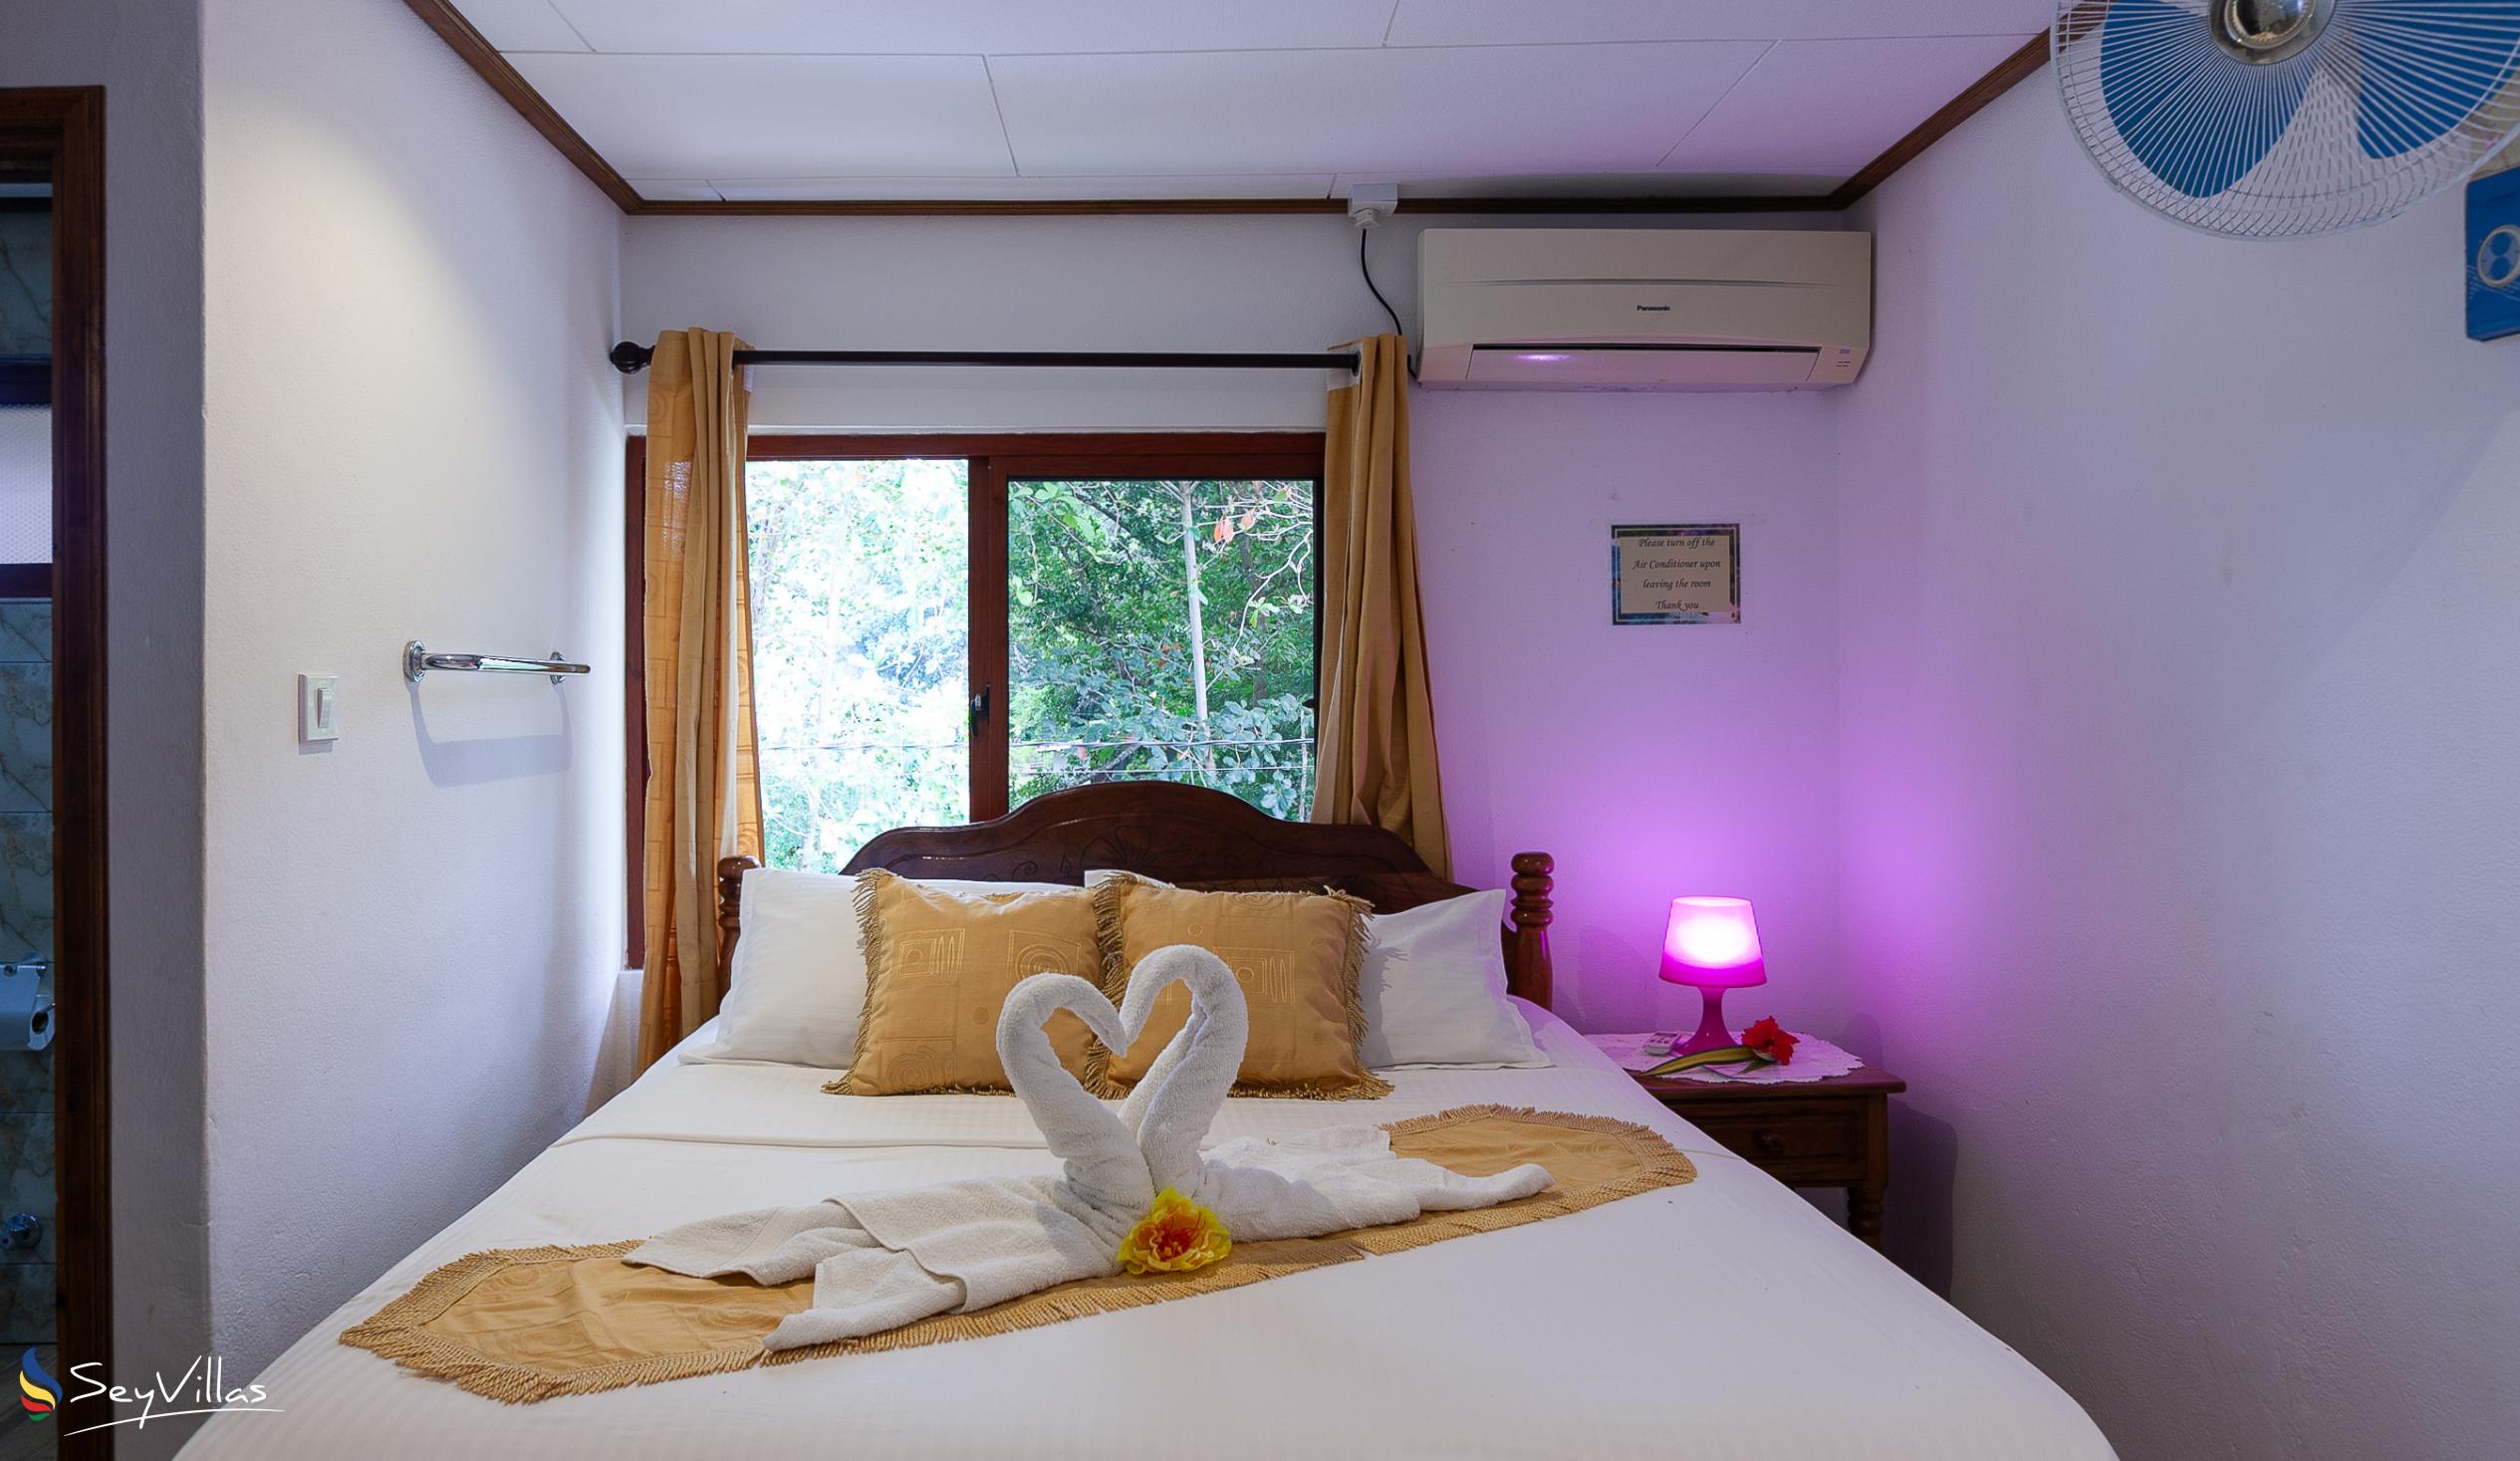 Photo 90: Tannette's Villa - Standard Queen Room - La Digue (Seychelles)